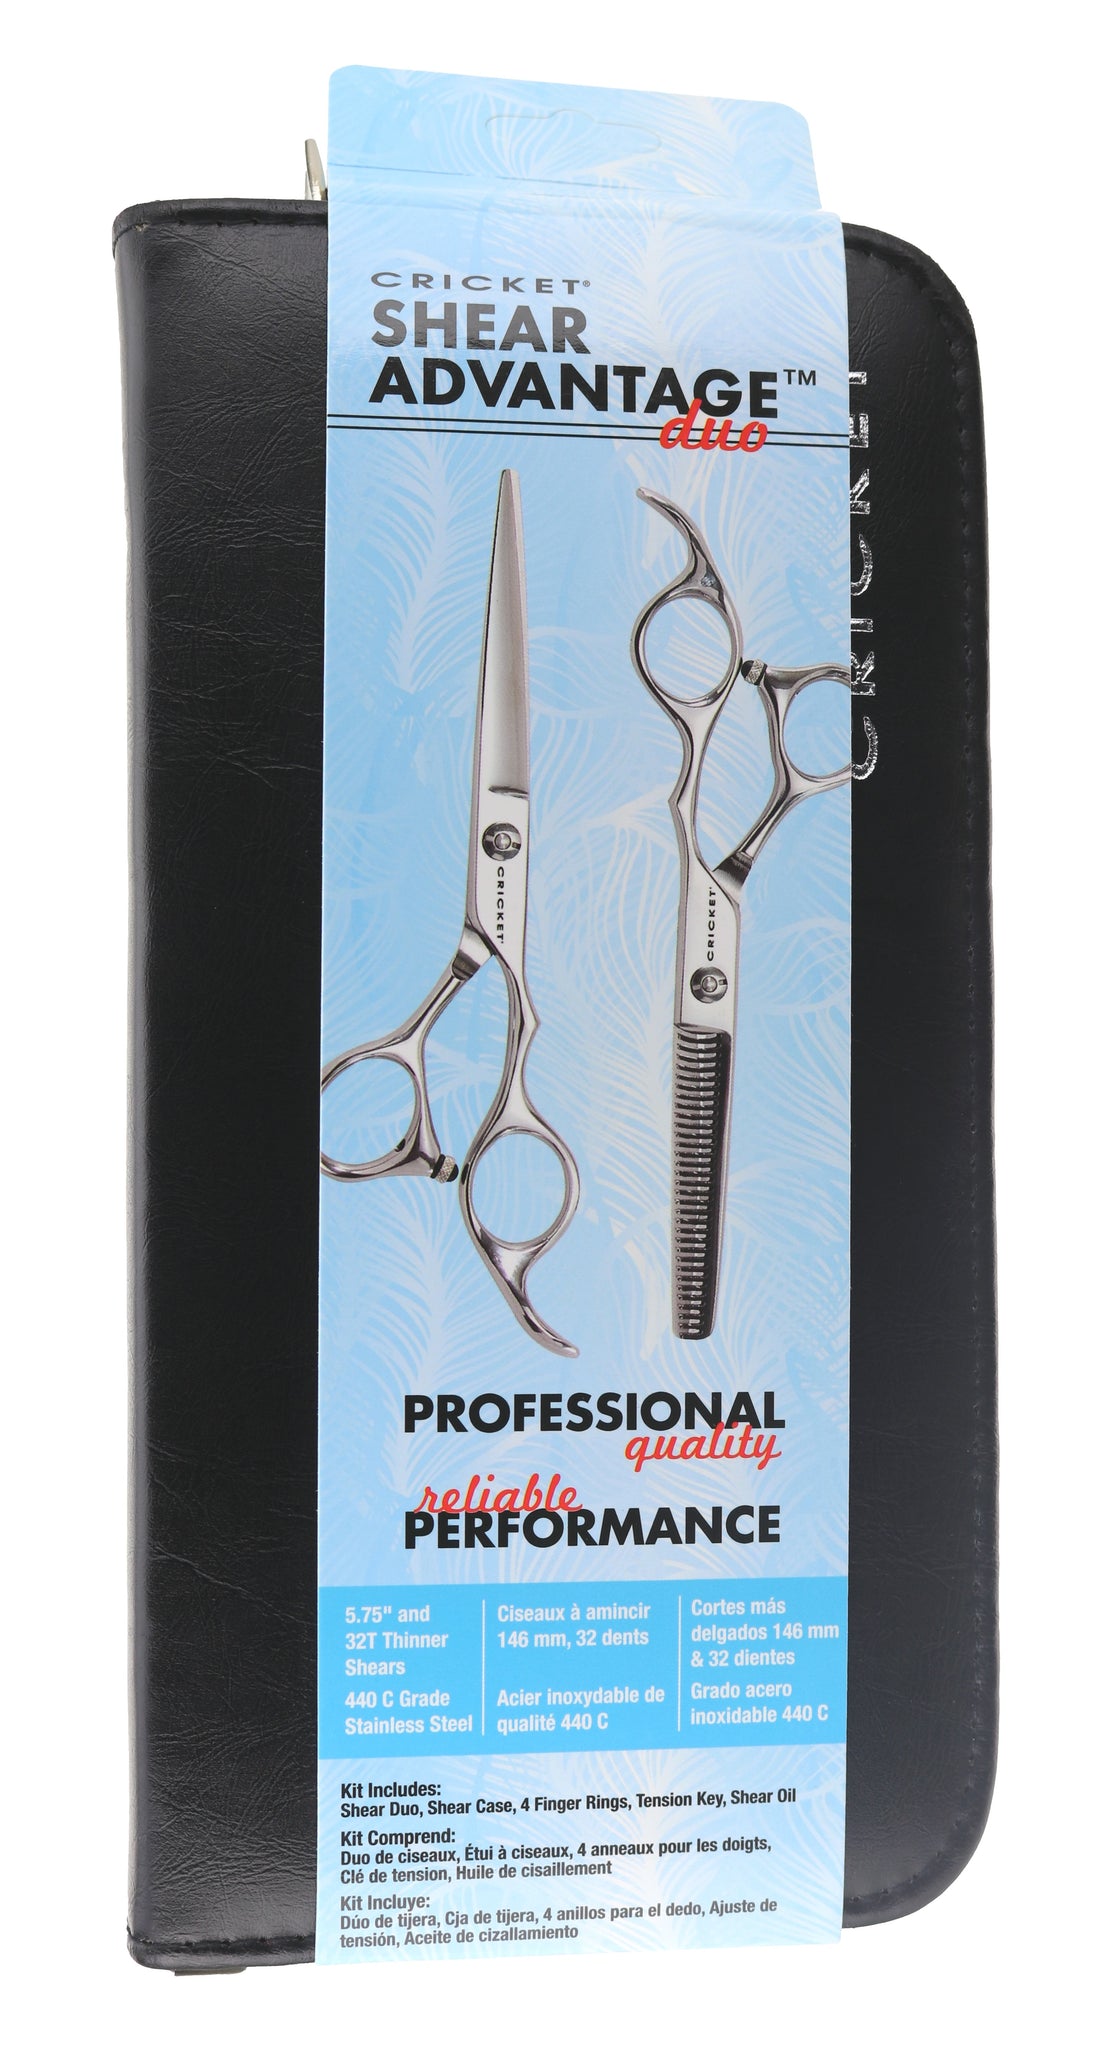 salon performance hair cutting scissors